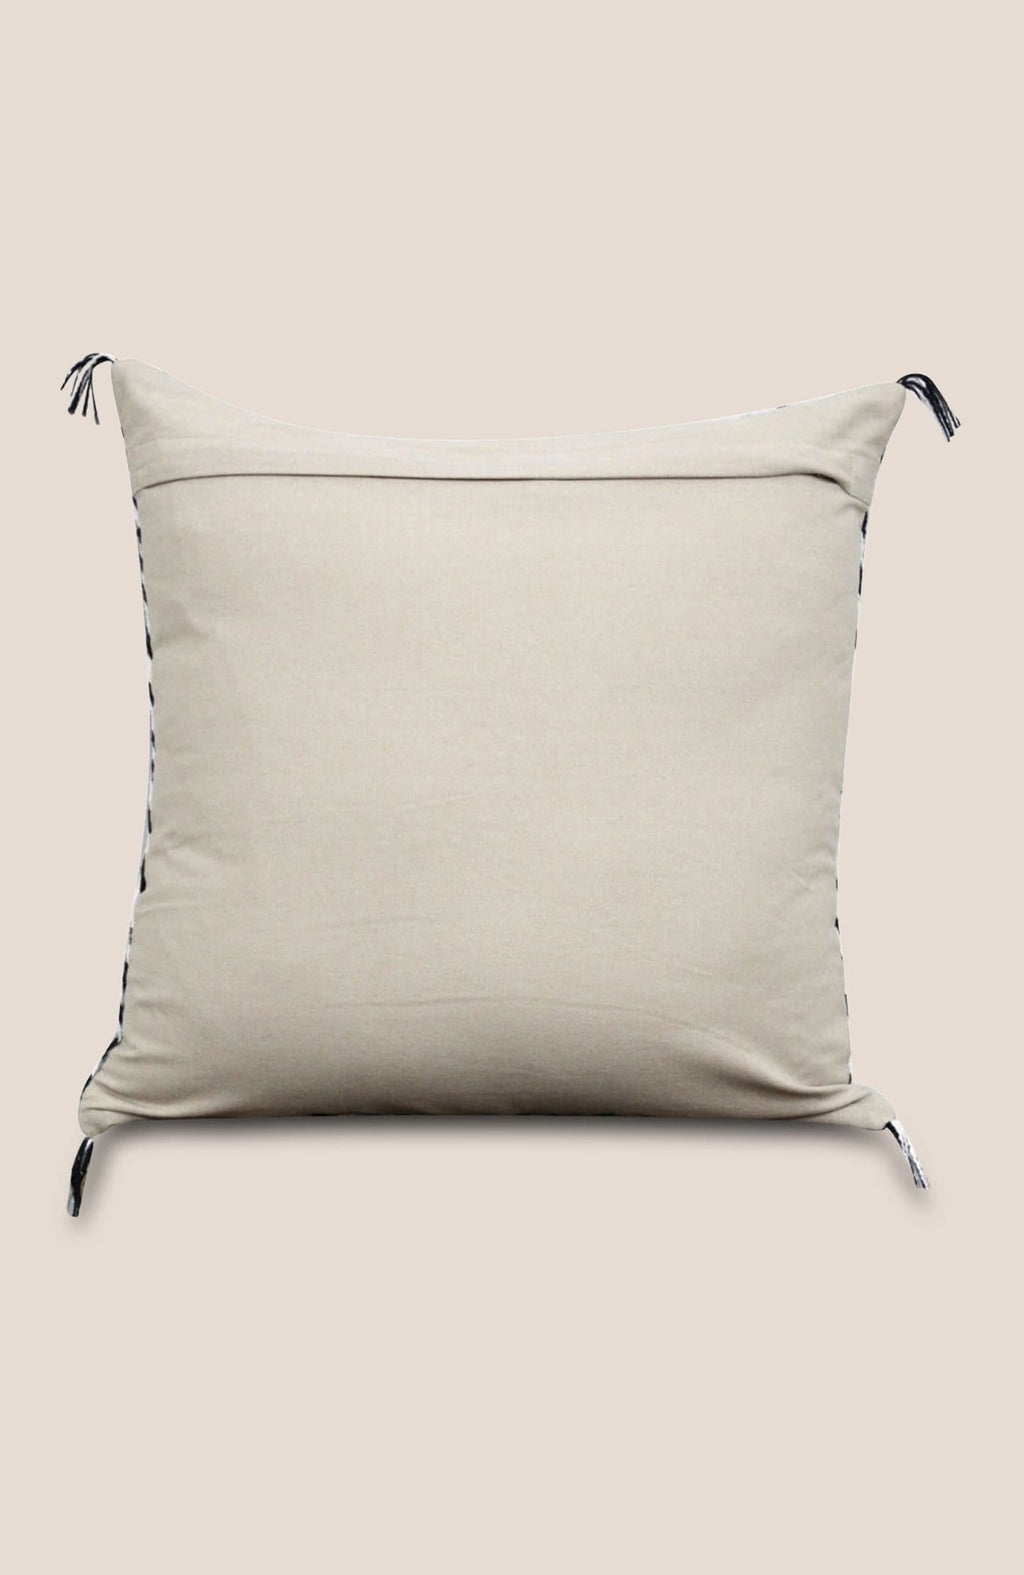 Sabra Pillow Cover Marga - Home Decor | Shop Baskets, Ceramics, Pillows, Rugs & Wall Hangs online